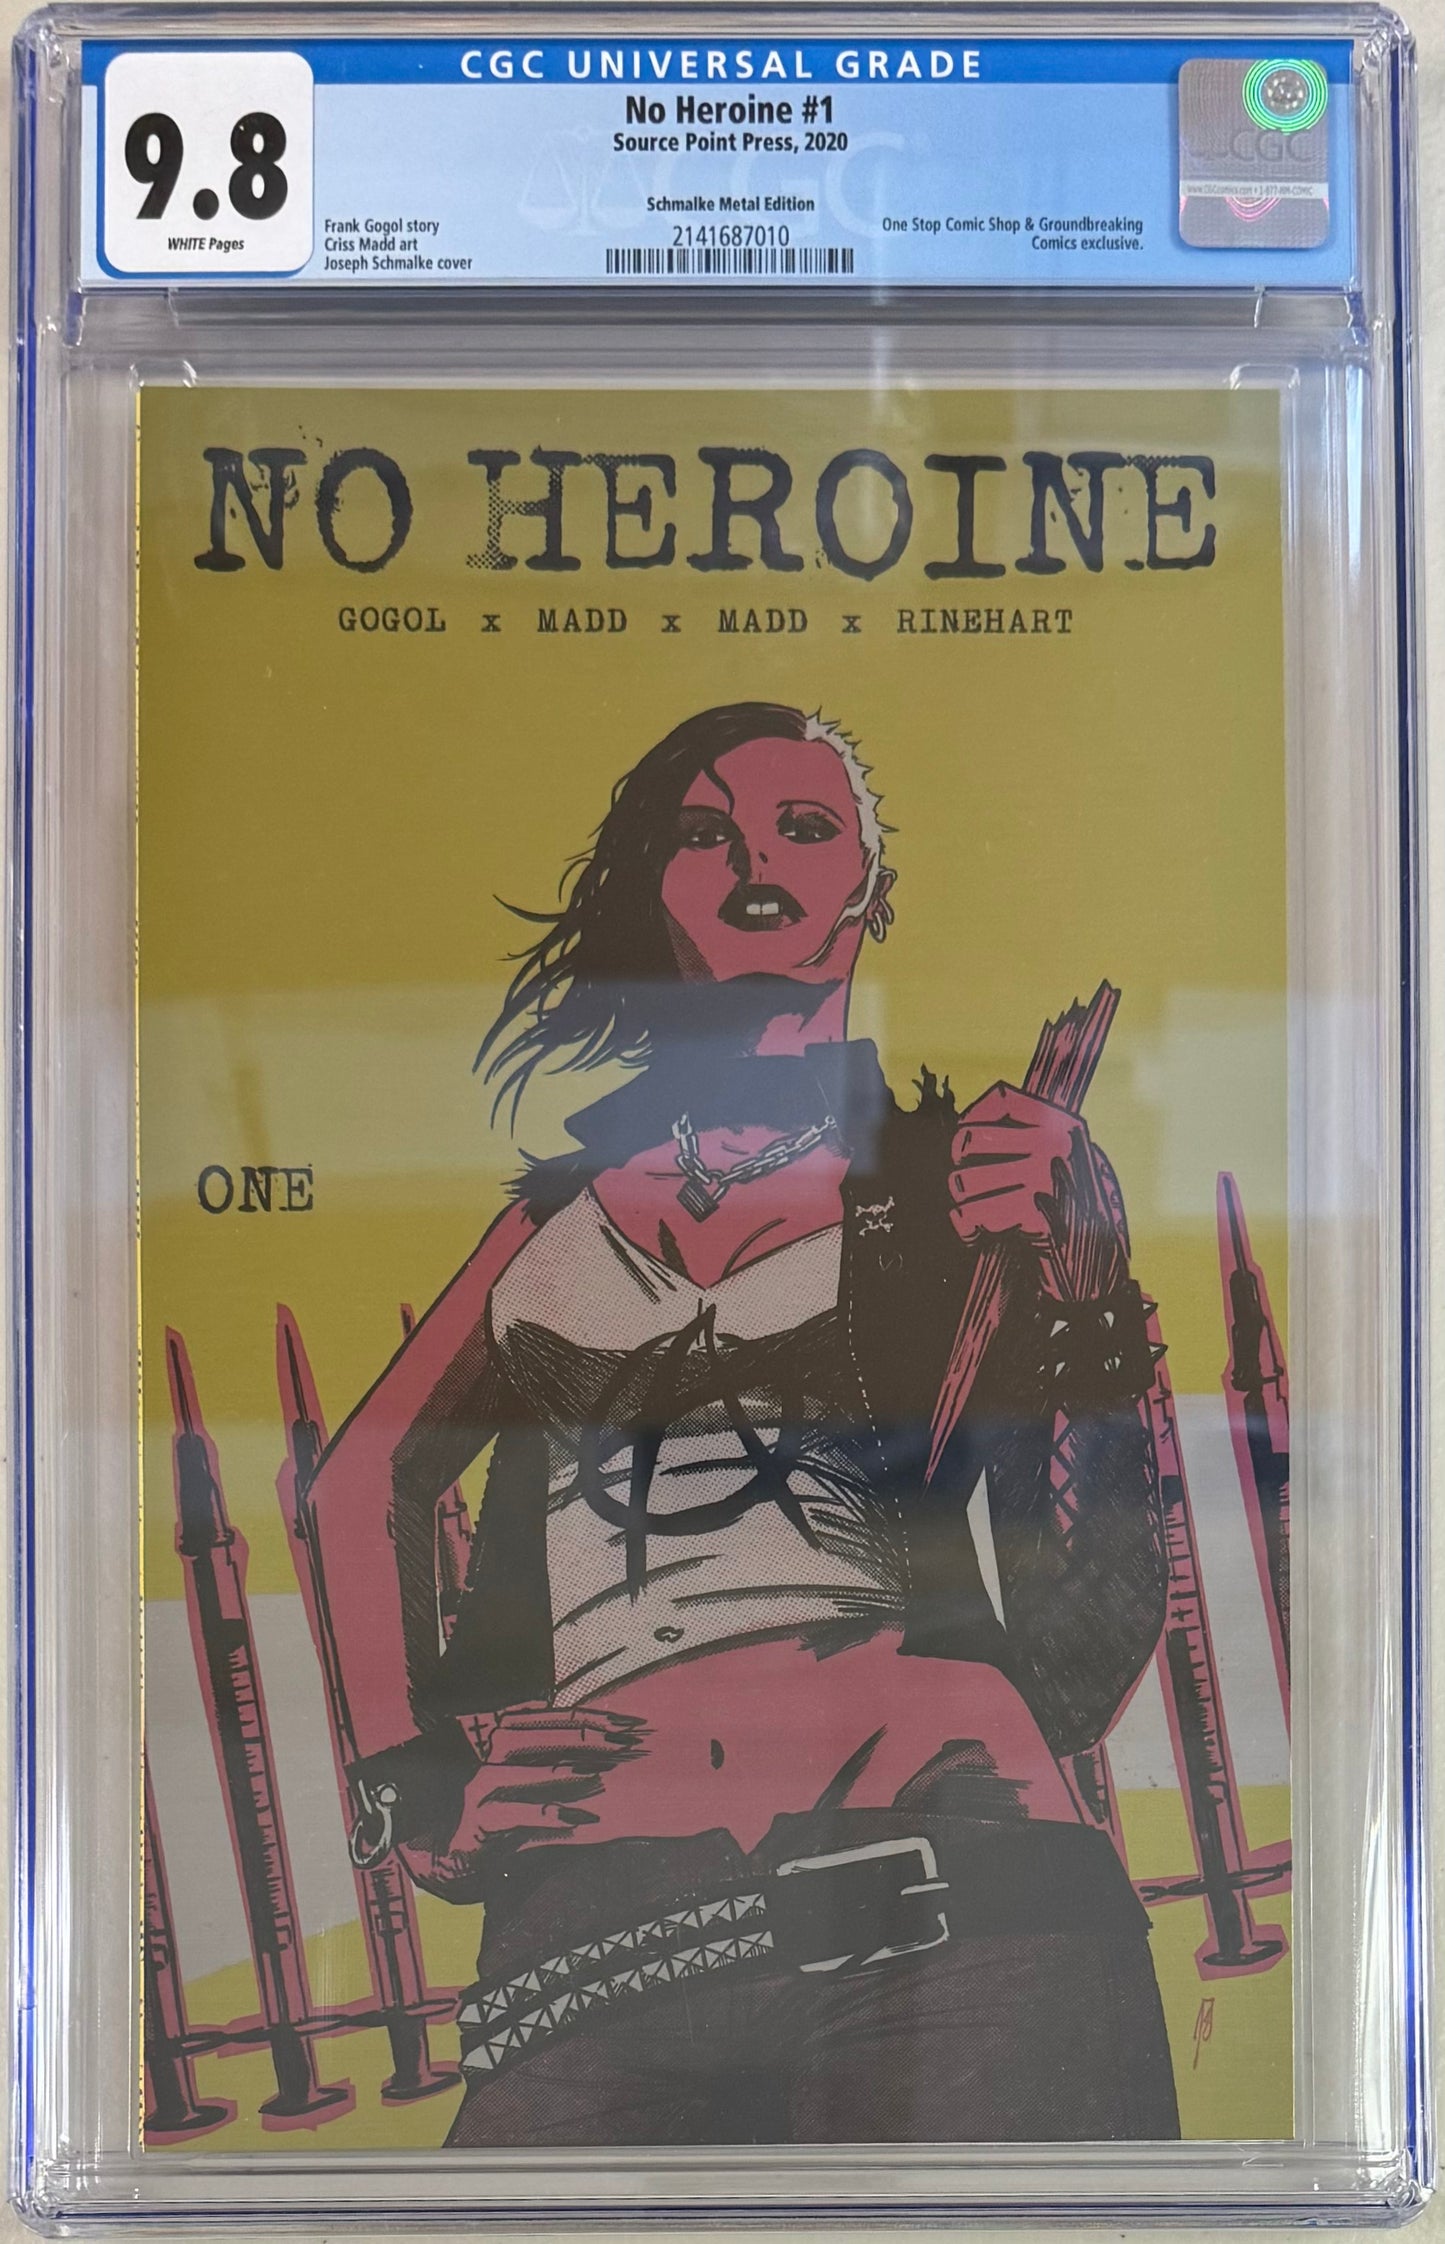 No Heroine #1 Joseph Schmalke Metal Edition CGC Graded 9.8